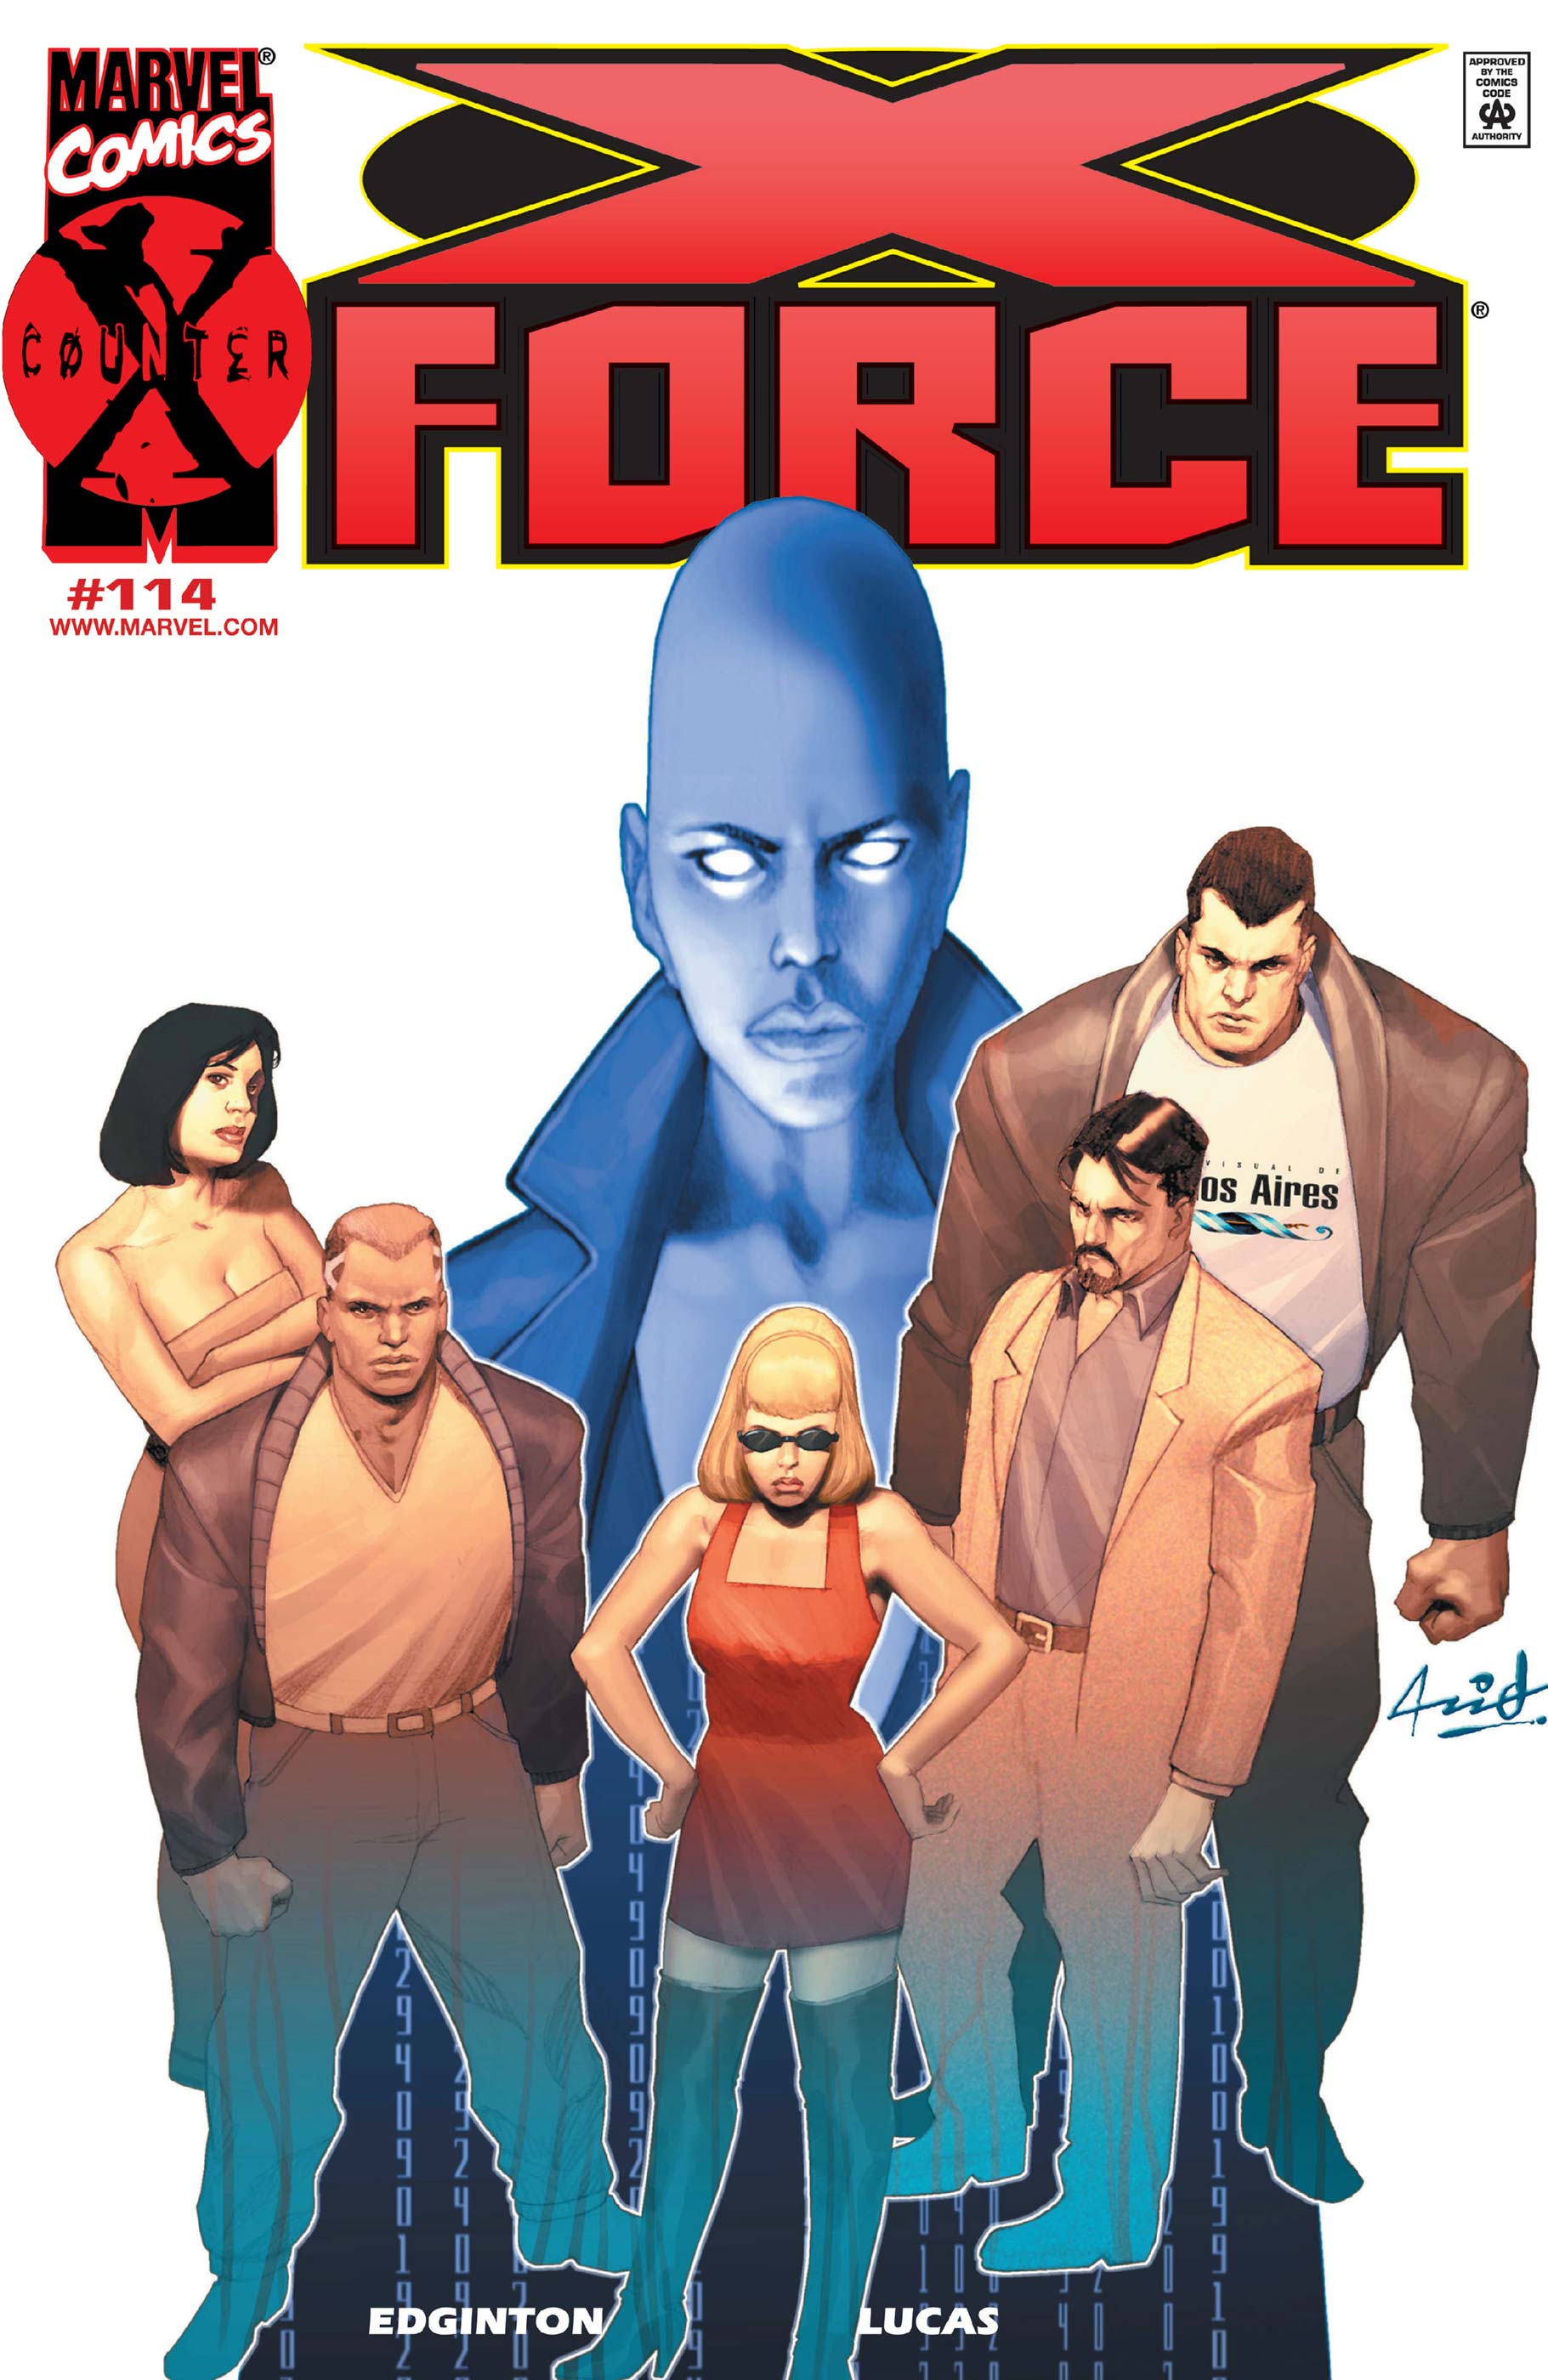 X-FORCE #114#115#116 - MARVEL COMICS (2001)